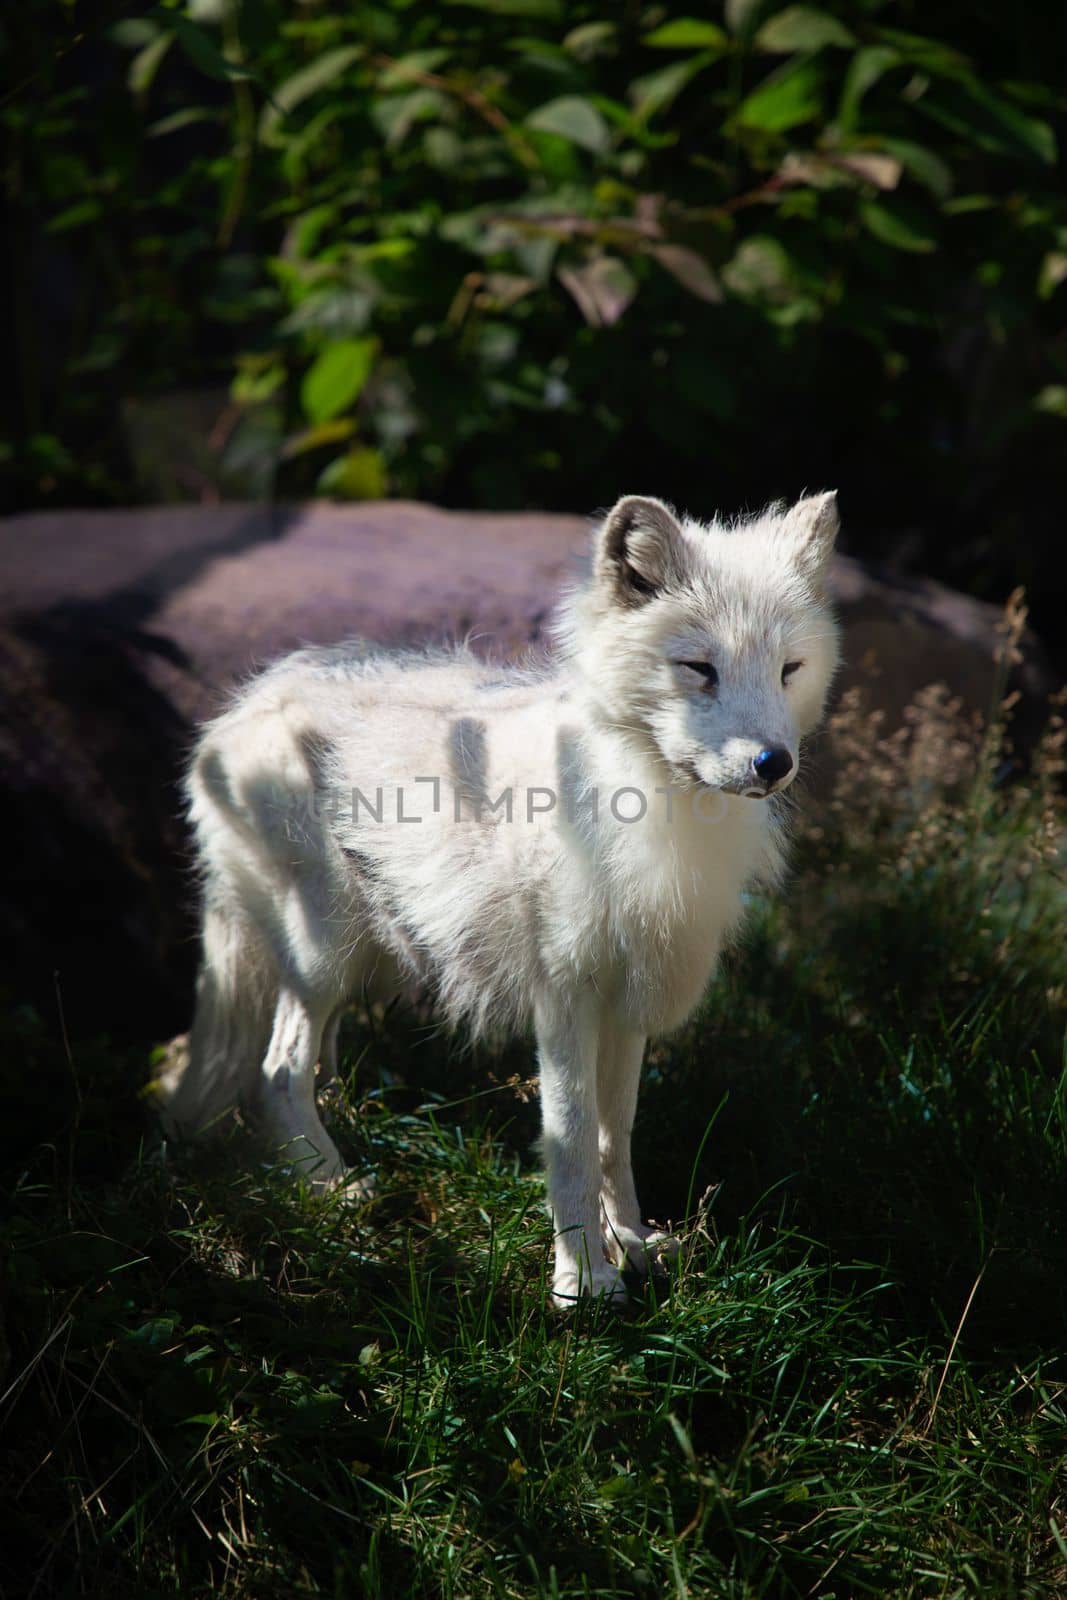 Artic fox by mypstudio